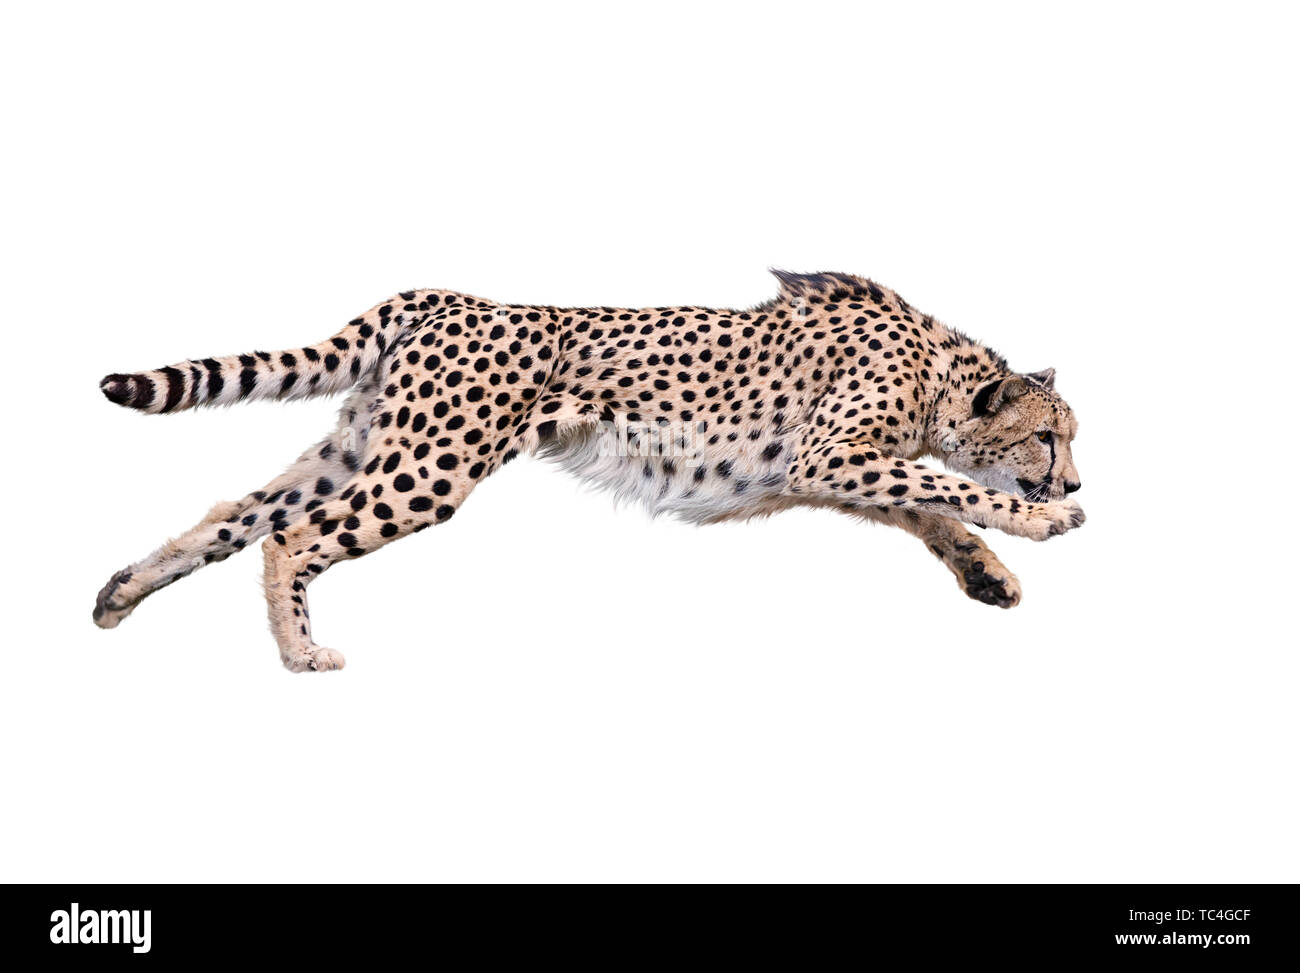 Image of running cheetah ,Isolated on white Background Stock Photo